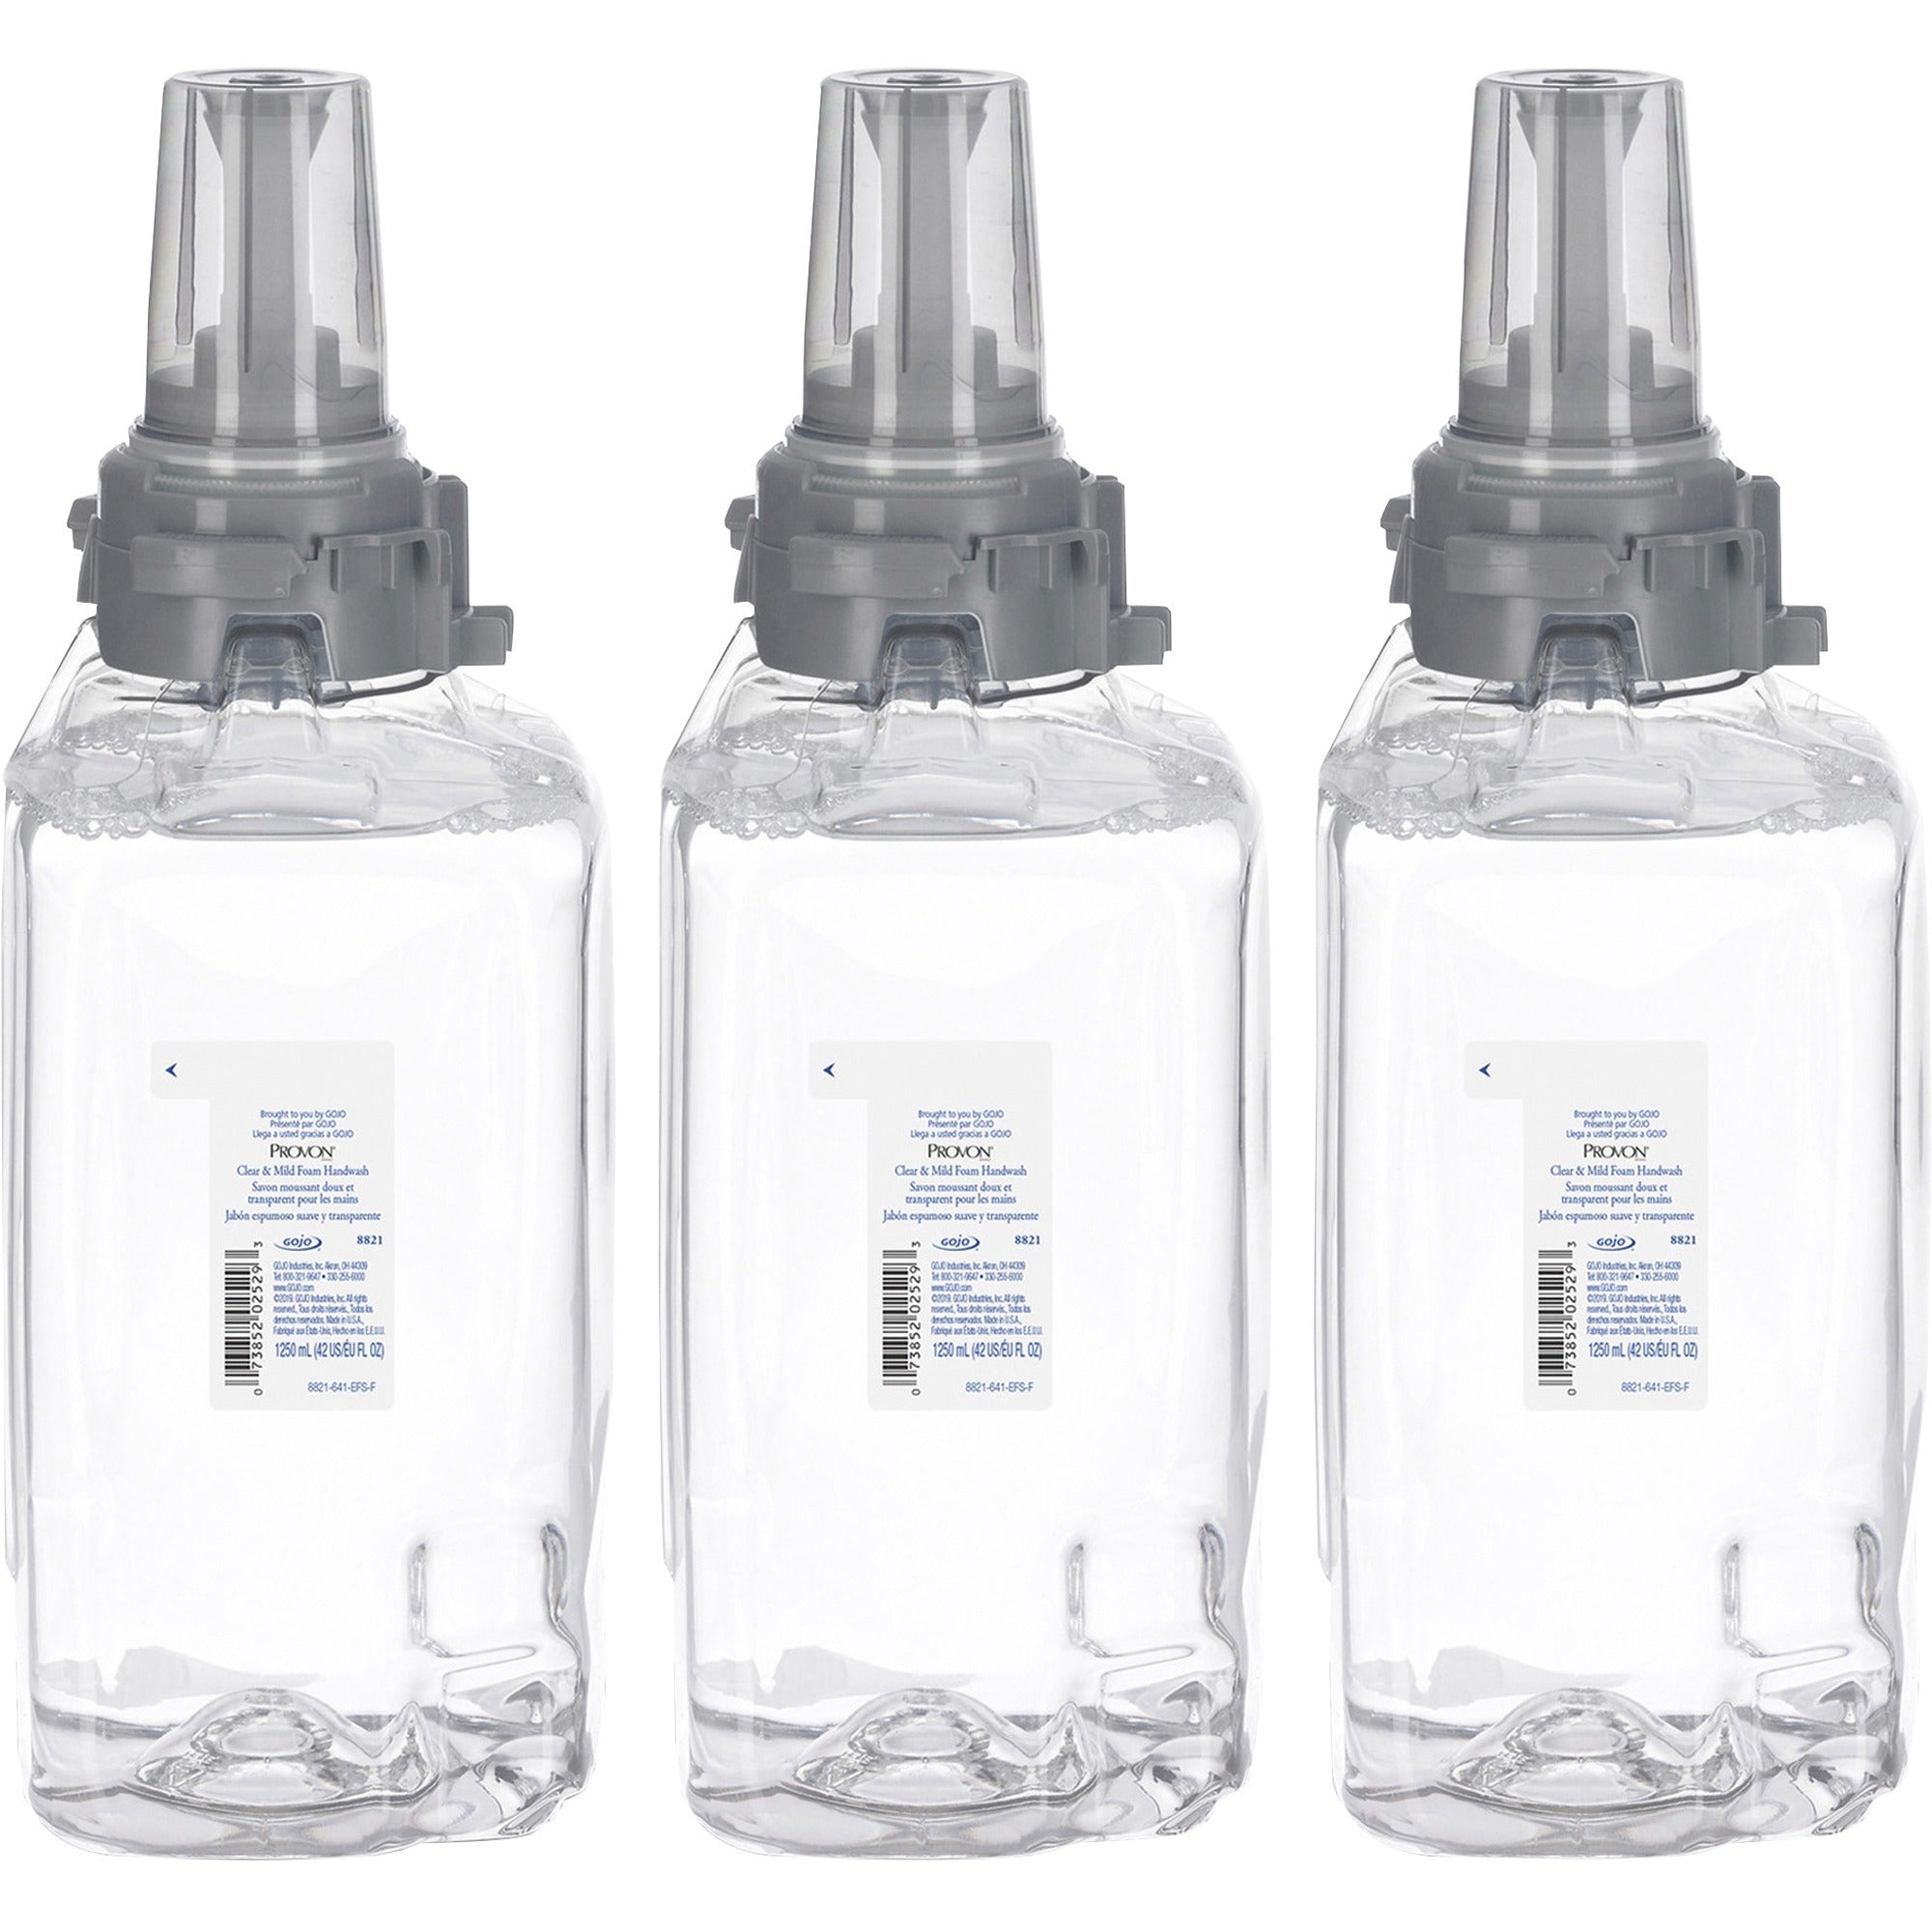 provon-adx-12-clear-&-mild-foam-handwash-fragrance-free-scentfor-423-fl-oz-1250-ml-pump-bottle-dispenser-kill-germs-hand-moisturizing-clear-rich-lather-dye-free-bio-based-3-carton_goj882103ct - 1